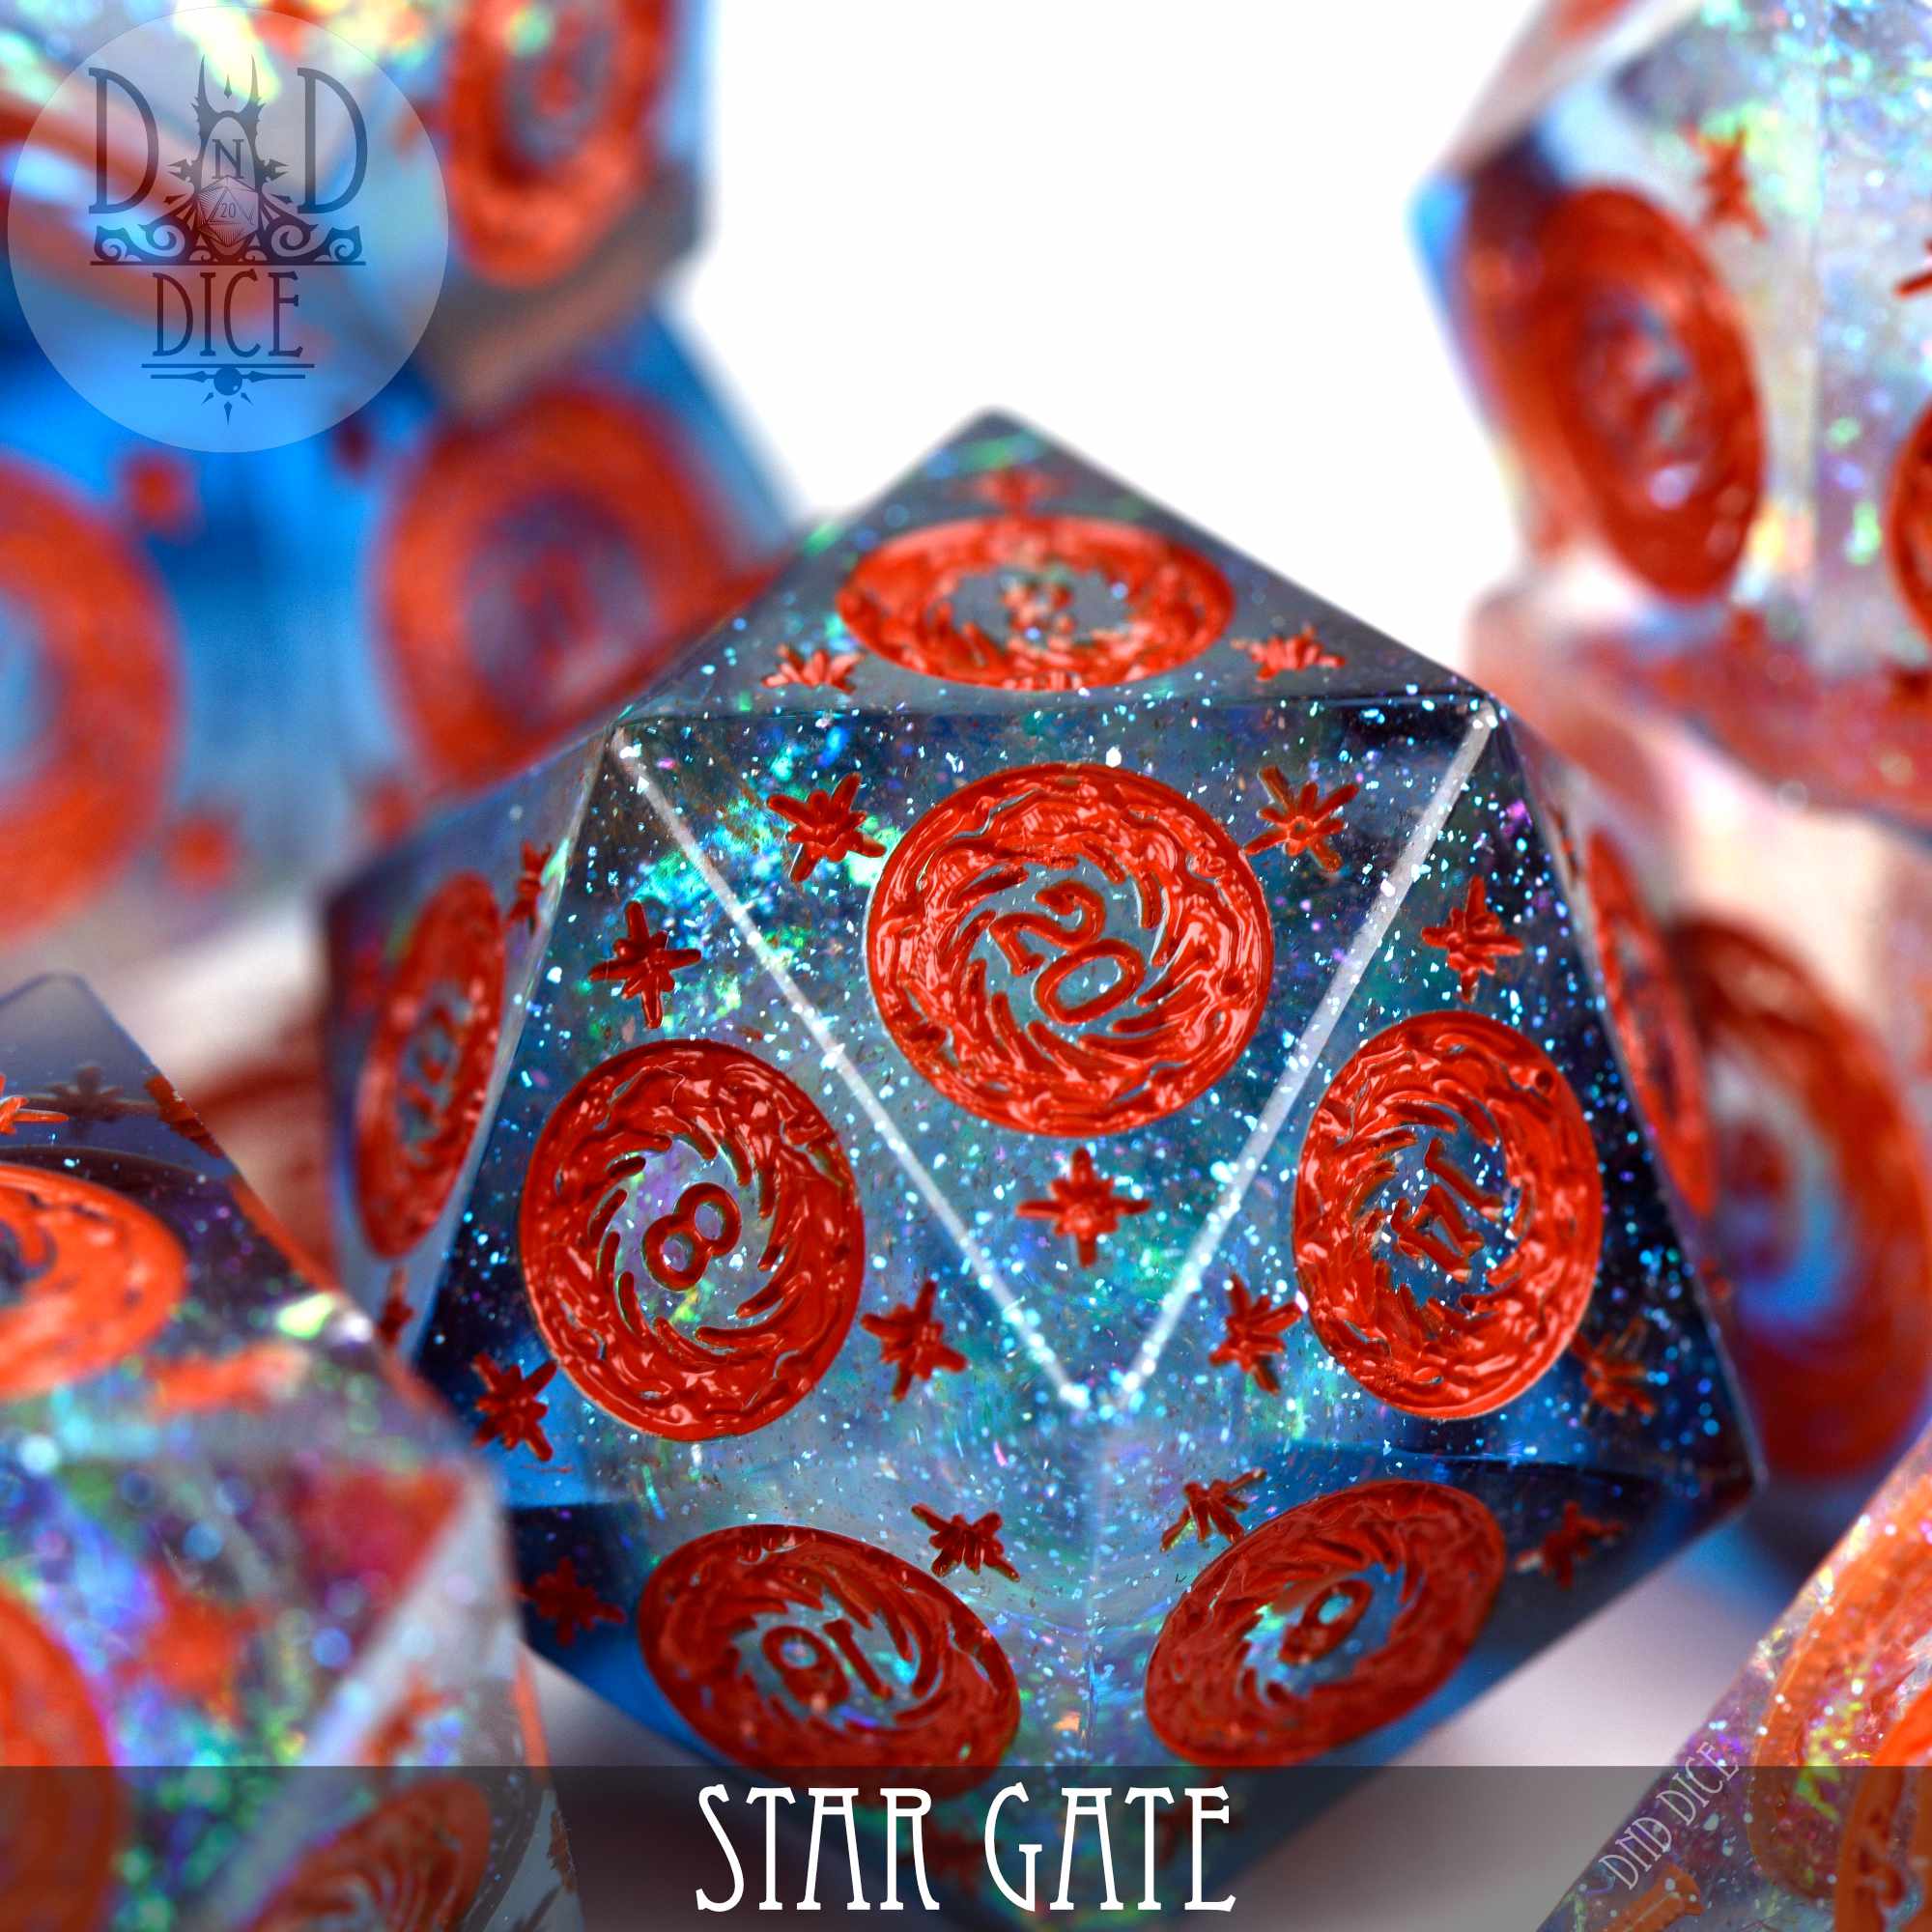 Star Gate Handmade Dice Set